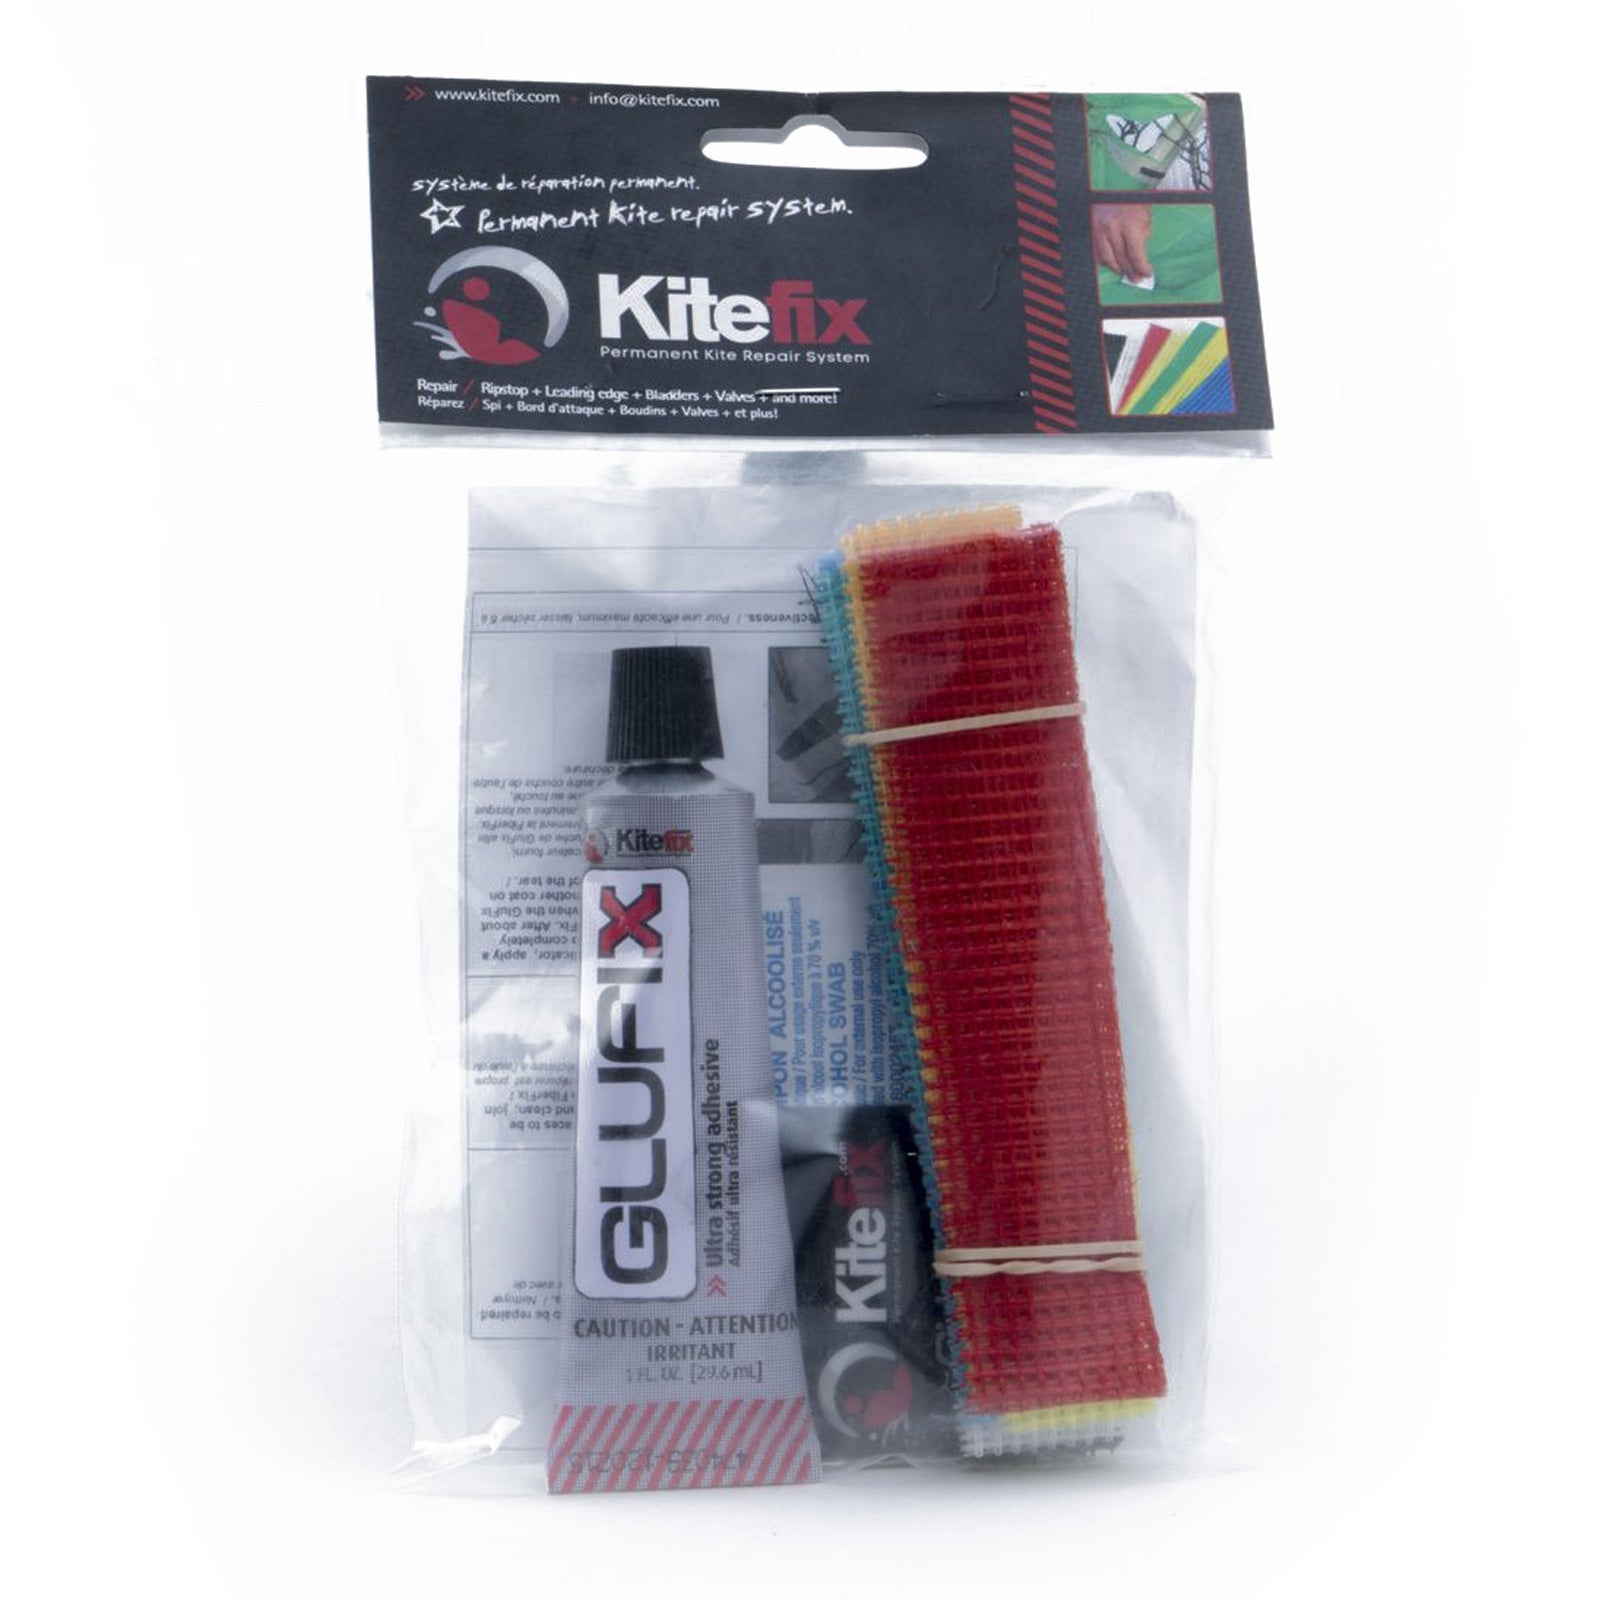 Kitefix Ripstop Repair Kit